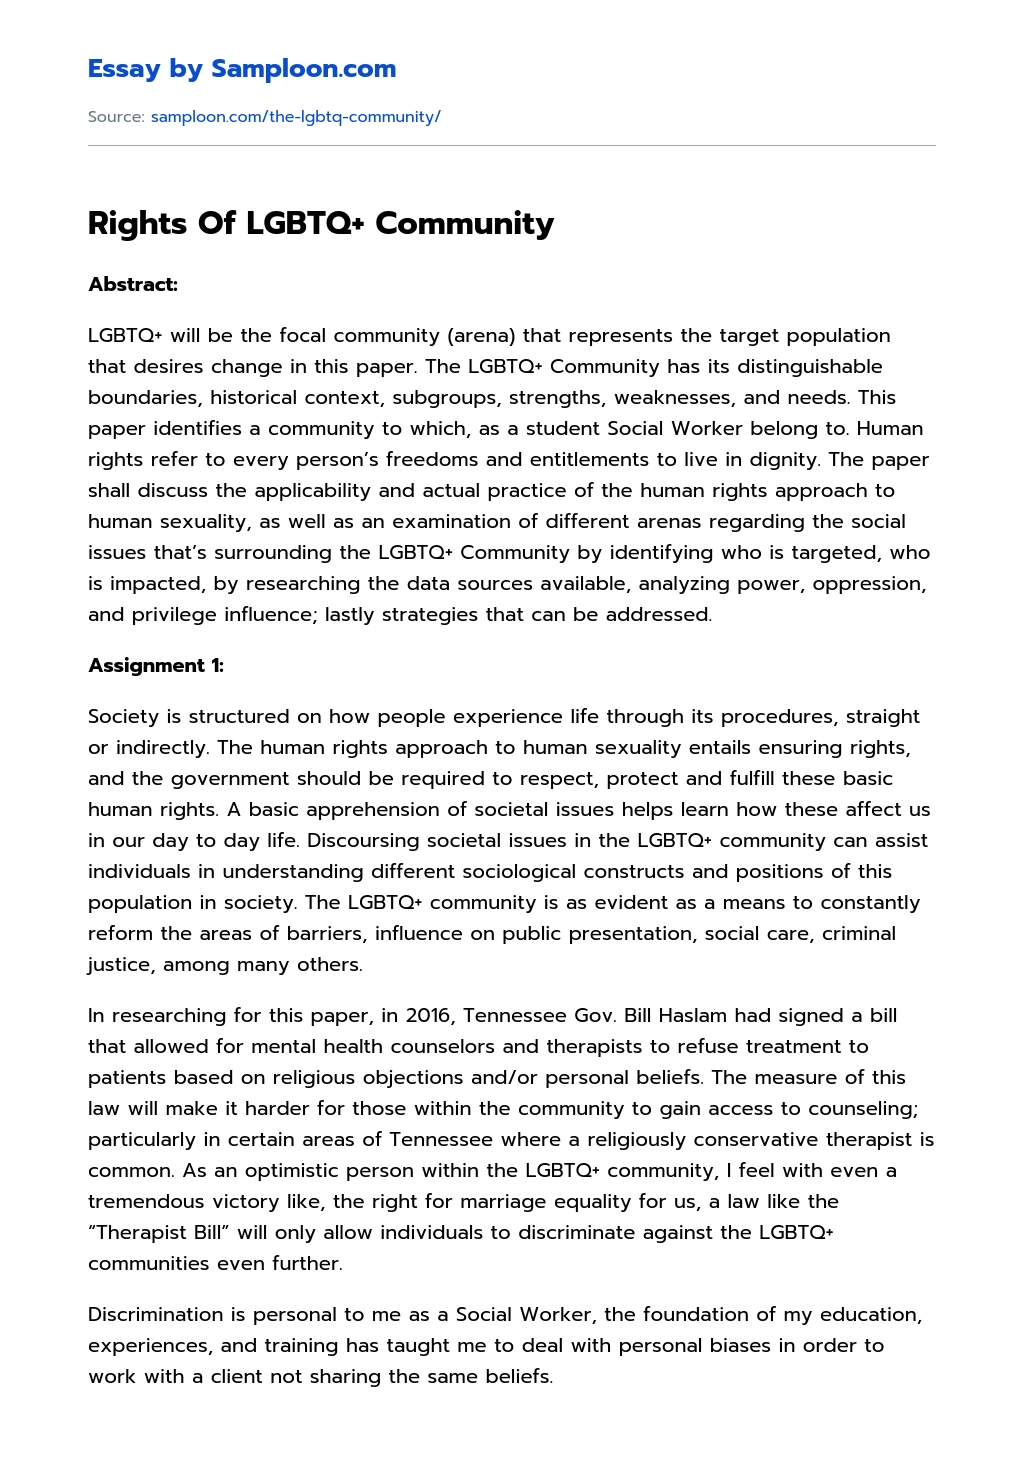 Rights Of LGBTQ+ Community essay